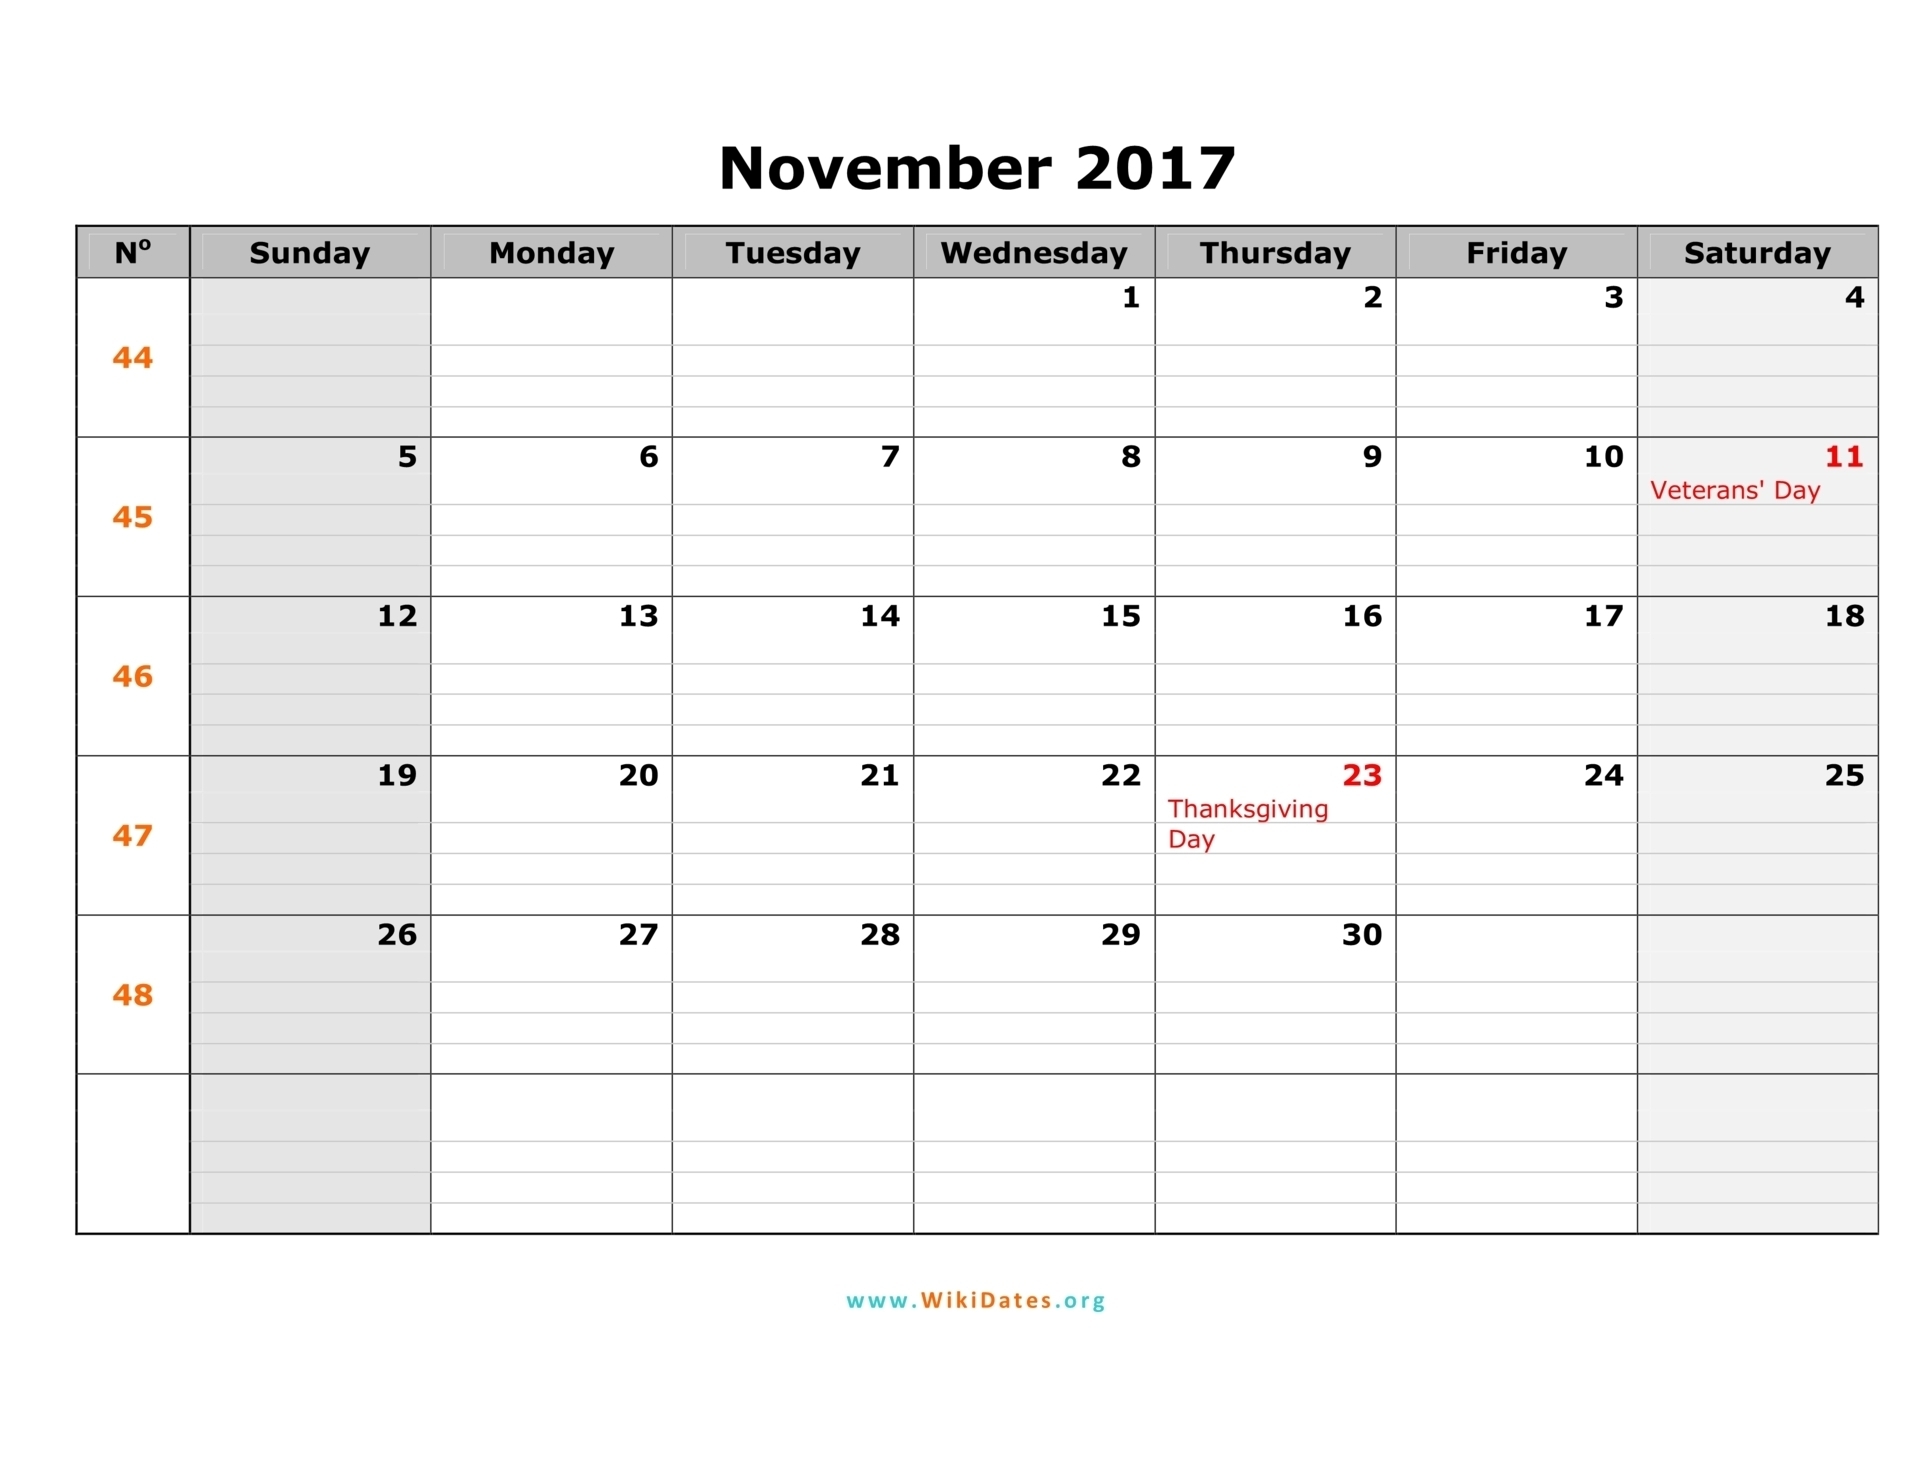 November 2019 Calendar Pdf | 2018 Yearly Calendar within Holiday Themed Cupcake Templates For Calendar